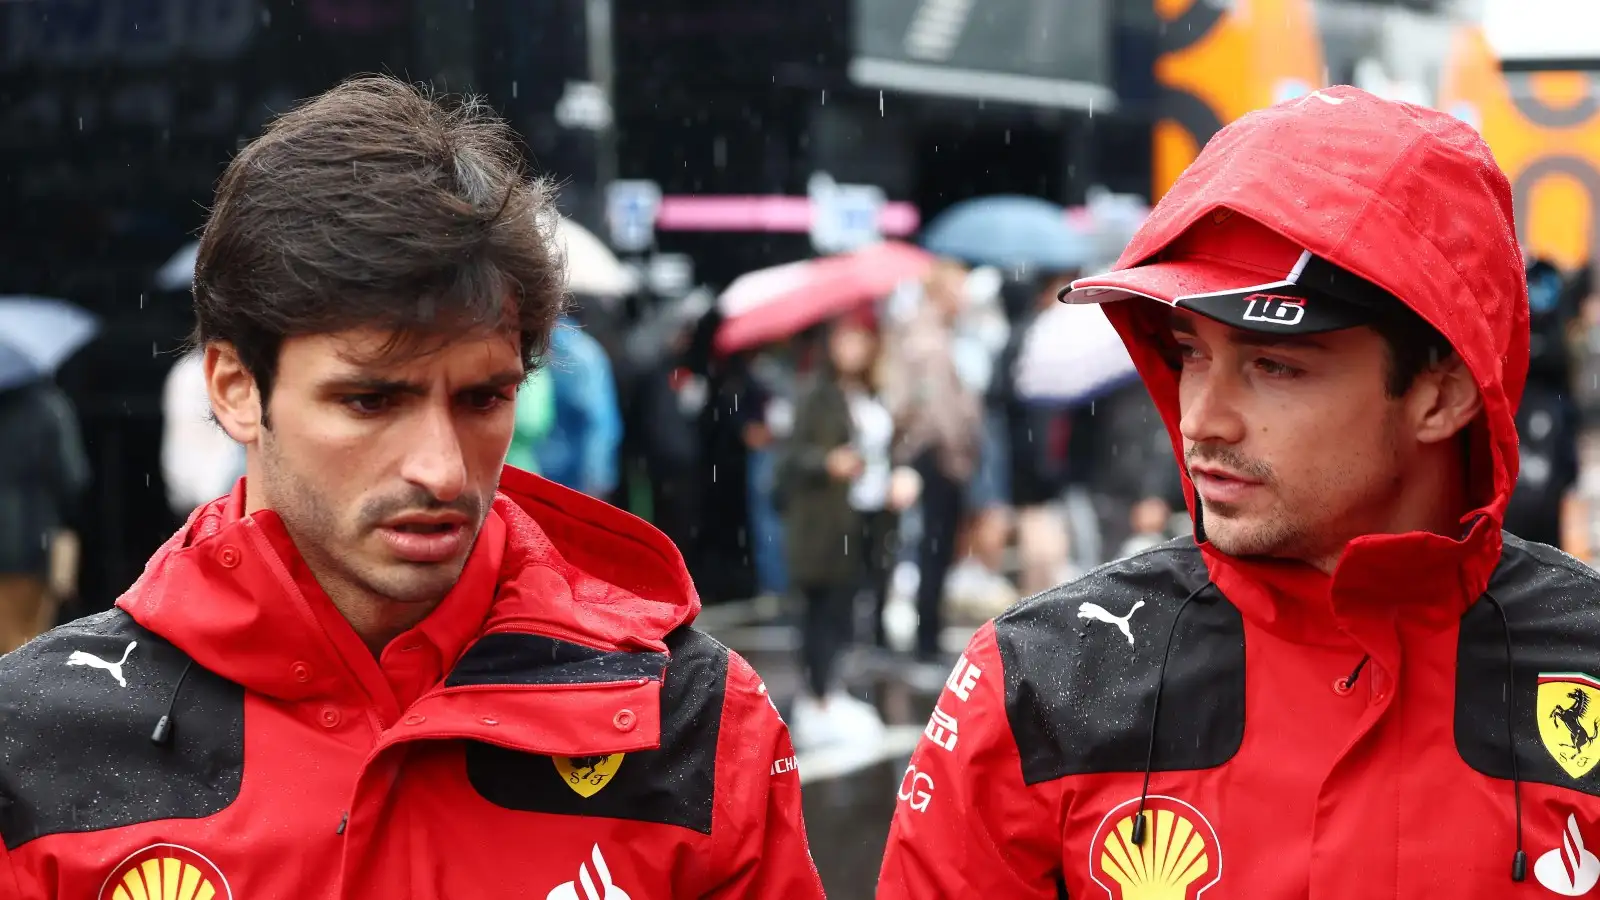 Carlos Sainz and Charles Leclerc in the rain at the Austrian Grand Prix.